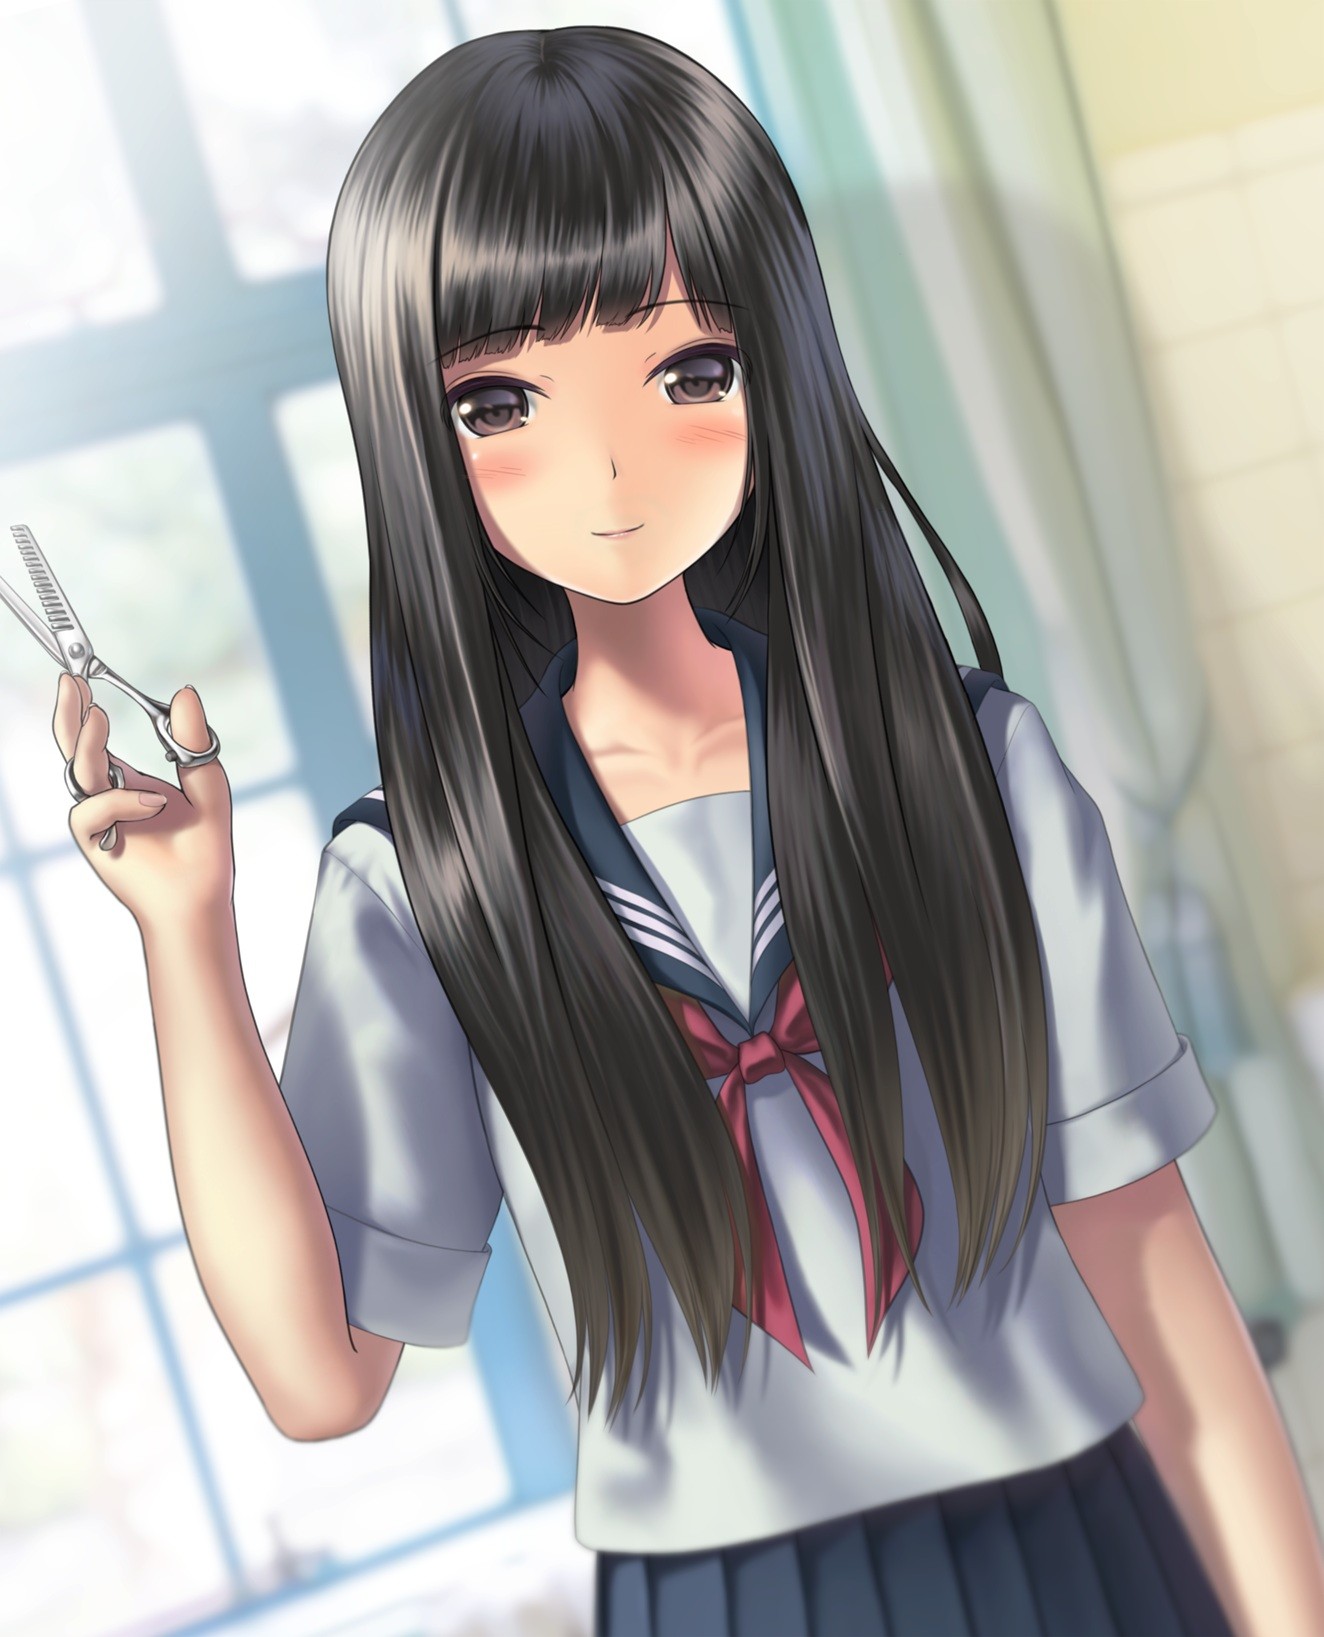 Anime 1324x1637 anime anime girls long hair black hair brown eyes school uniform artwork Sareko